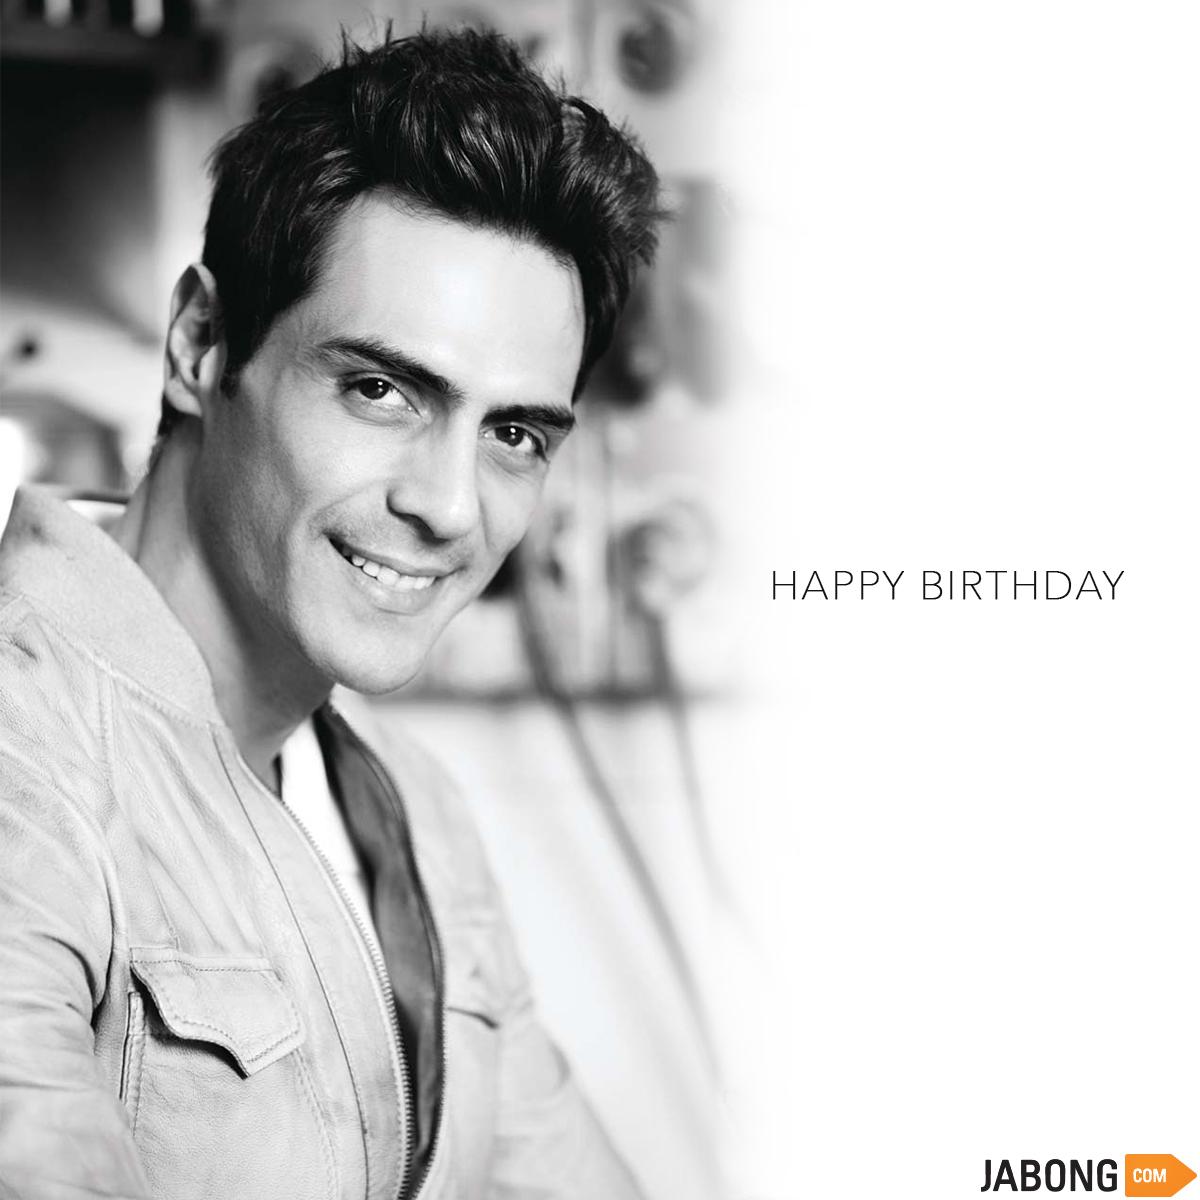 Heres wishing a very Happy Birthday to the hot heartthrob of Bollywood, Arjun Rampal! 